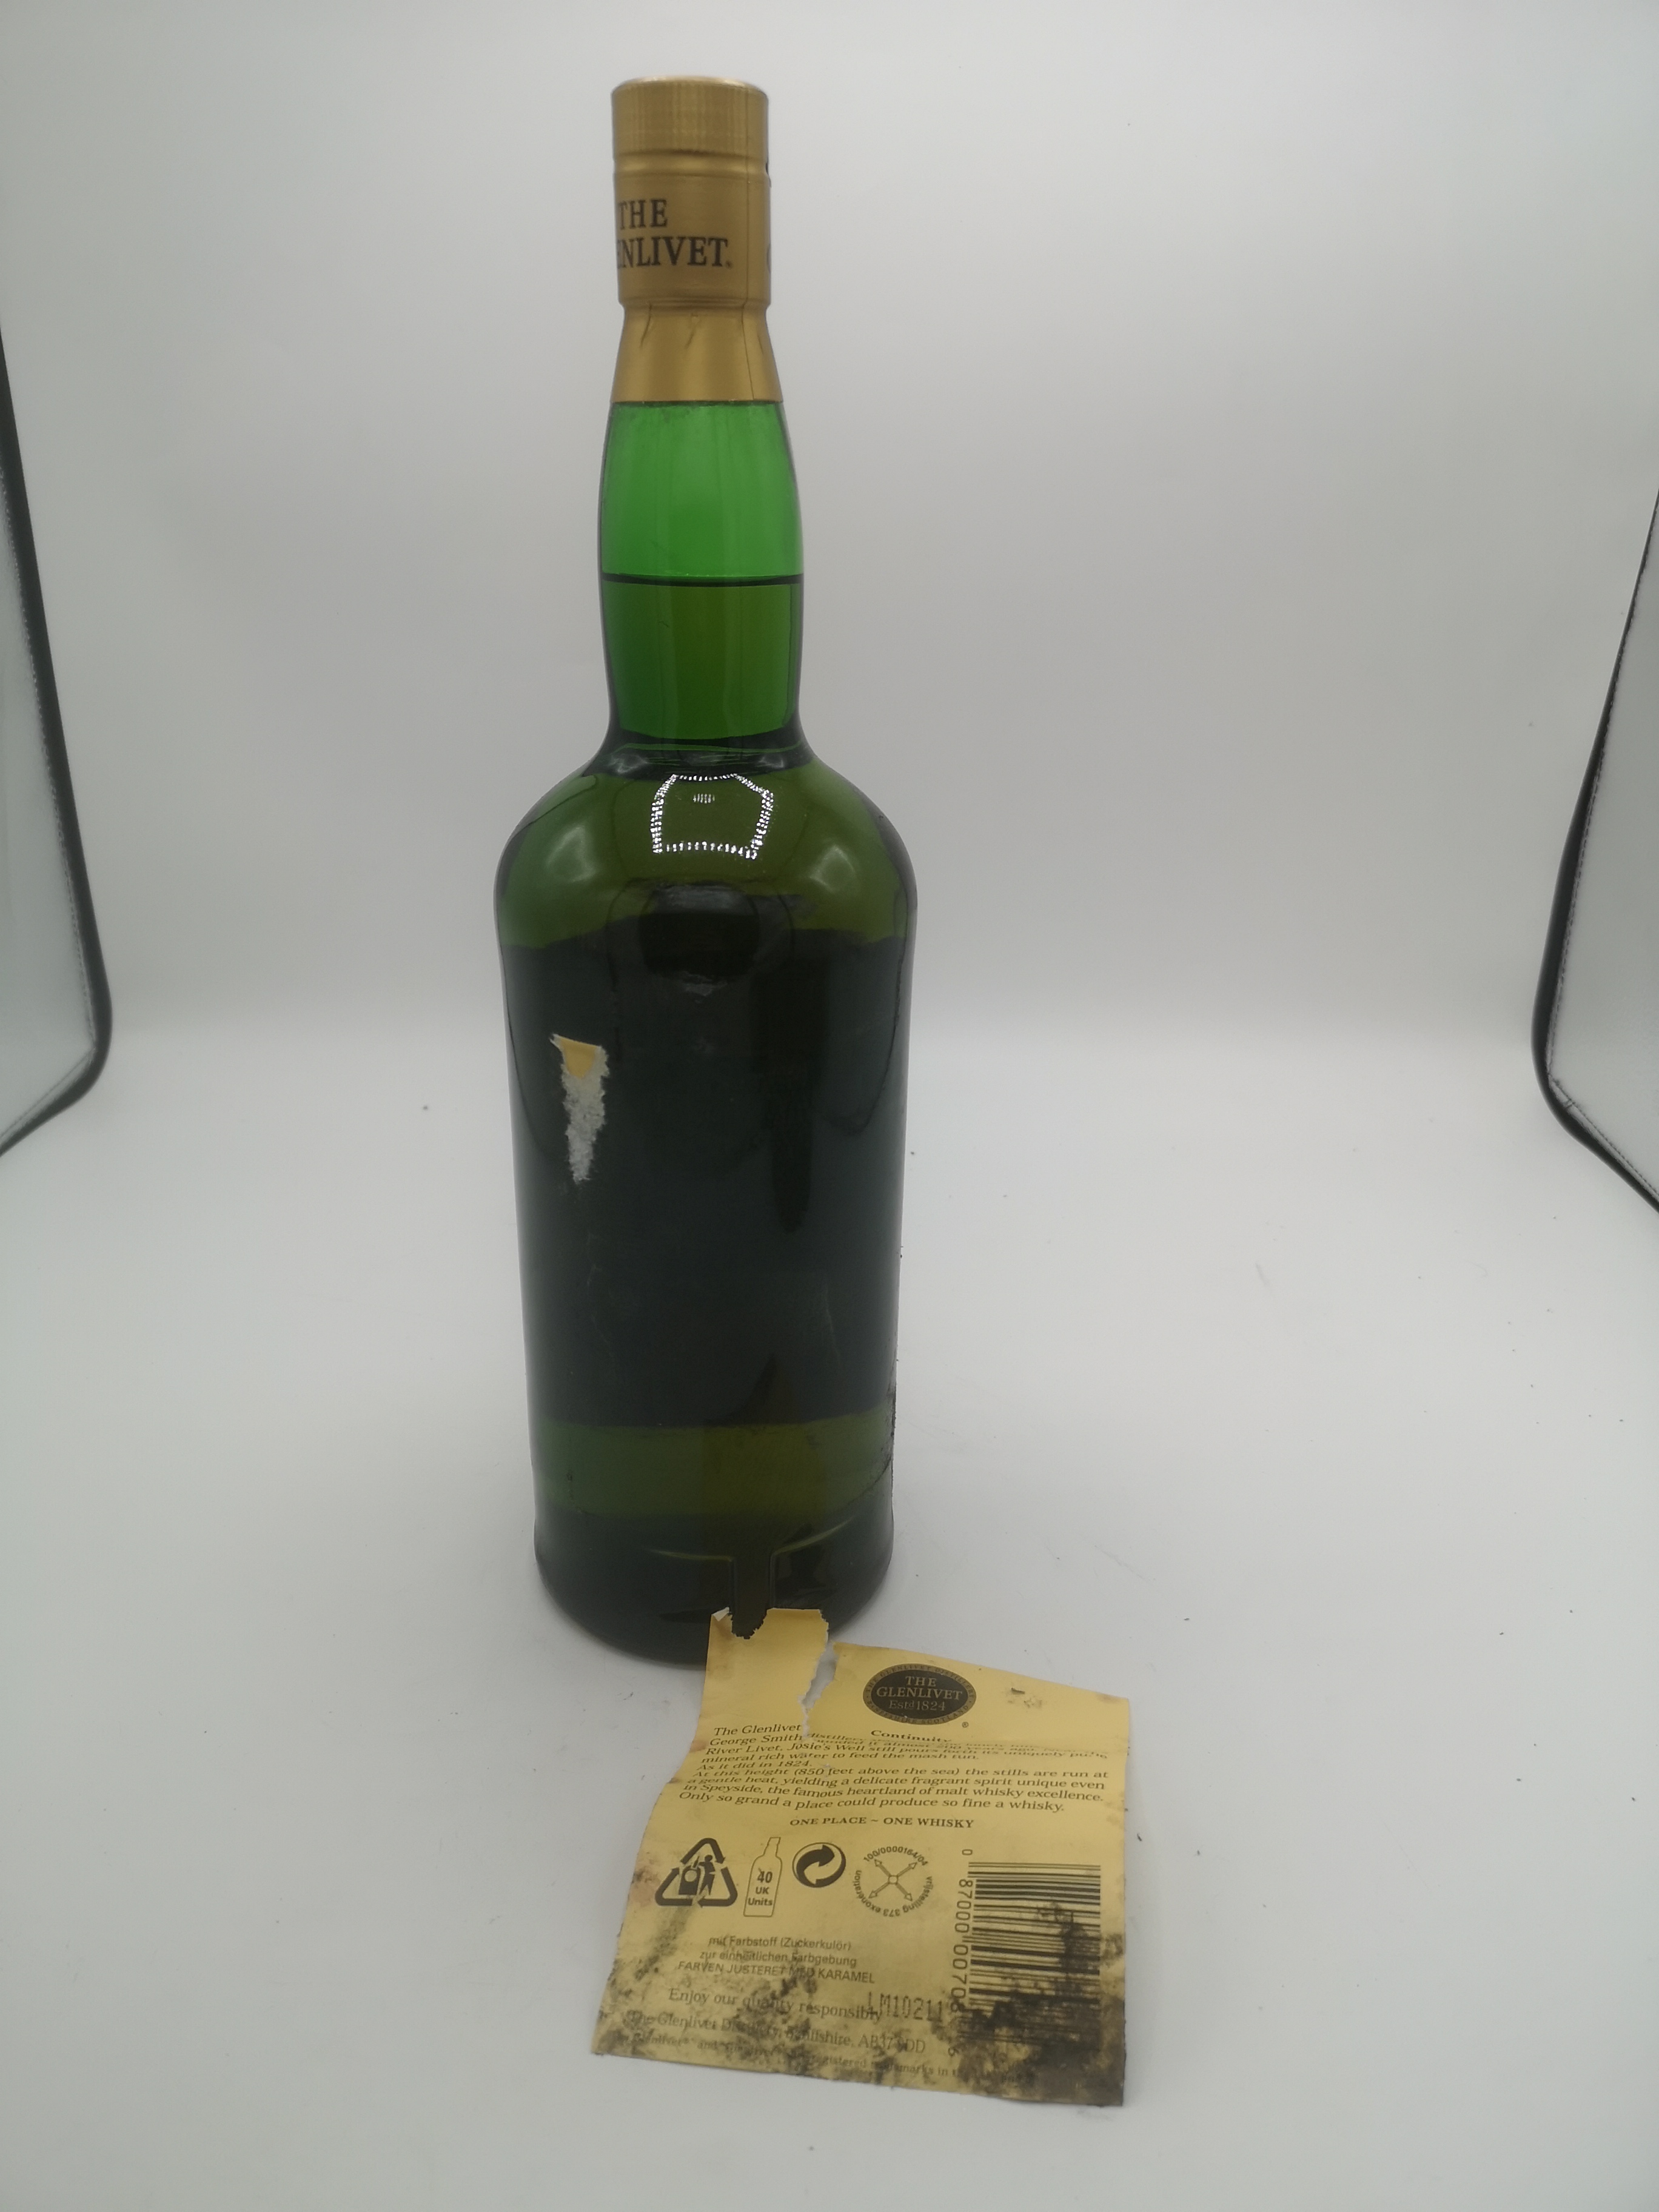 The Glenlivet, 1l pure single malt Scotch whisky - Image 3 of 8